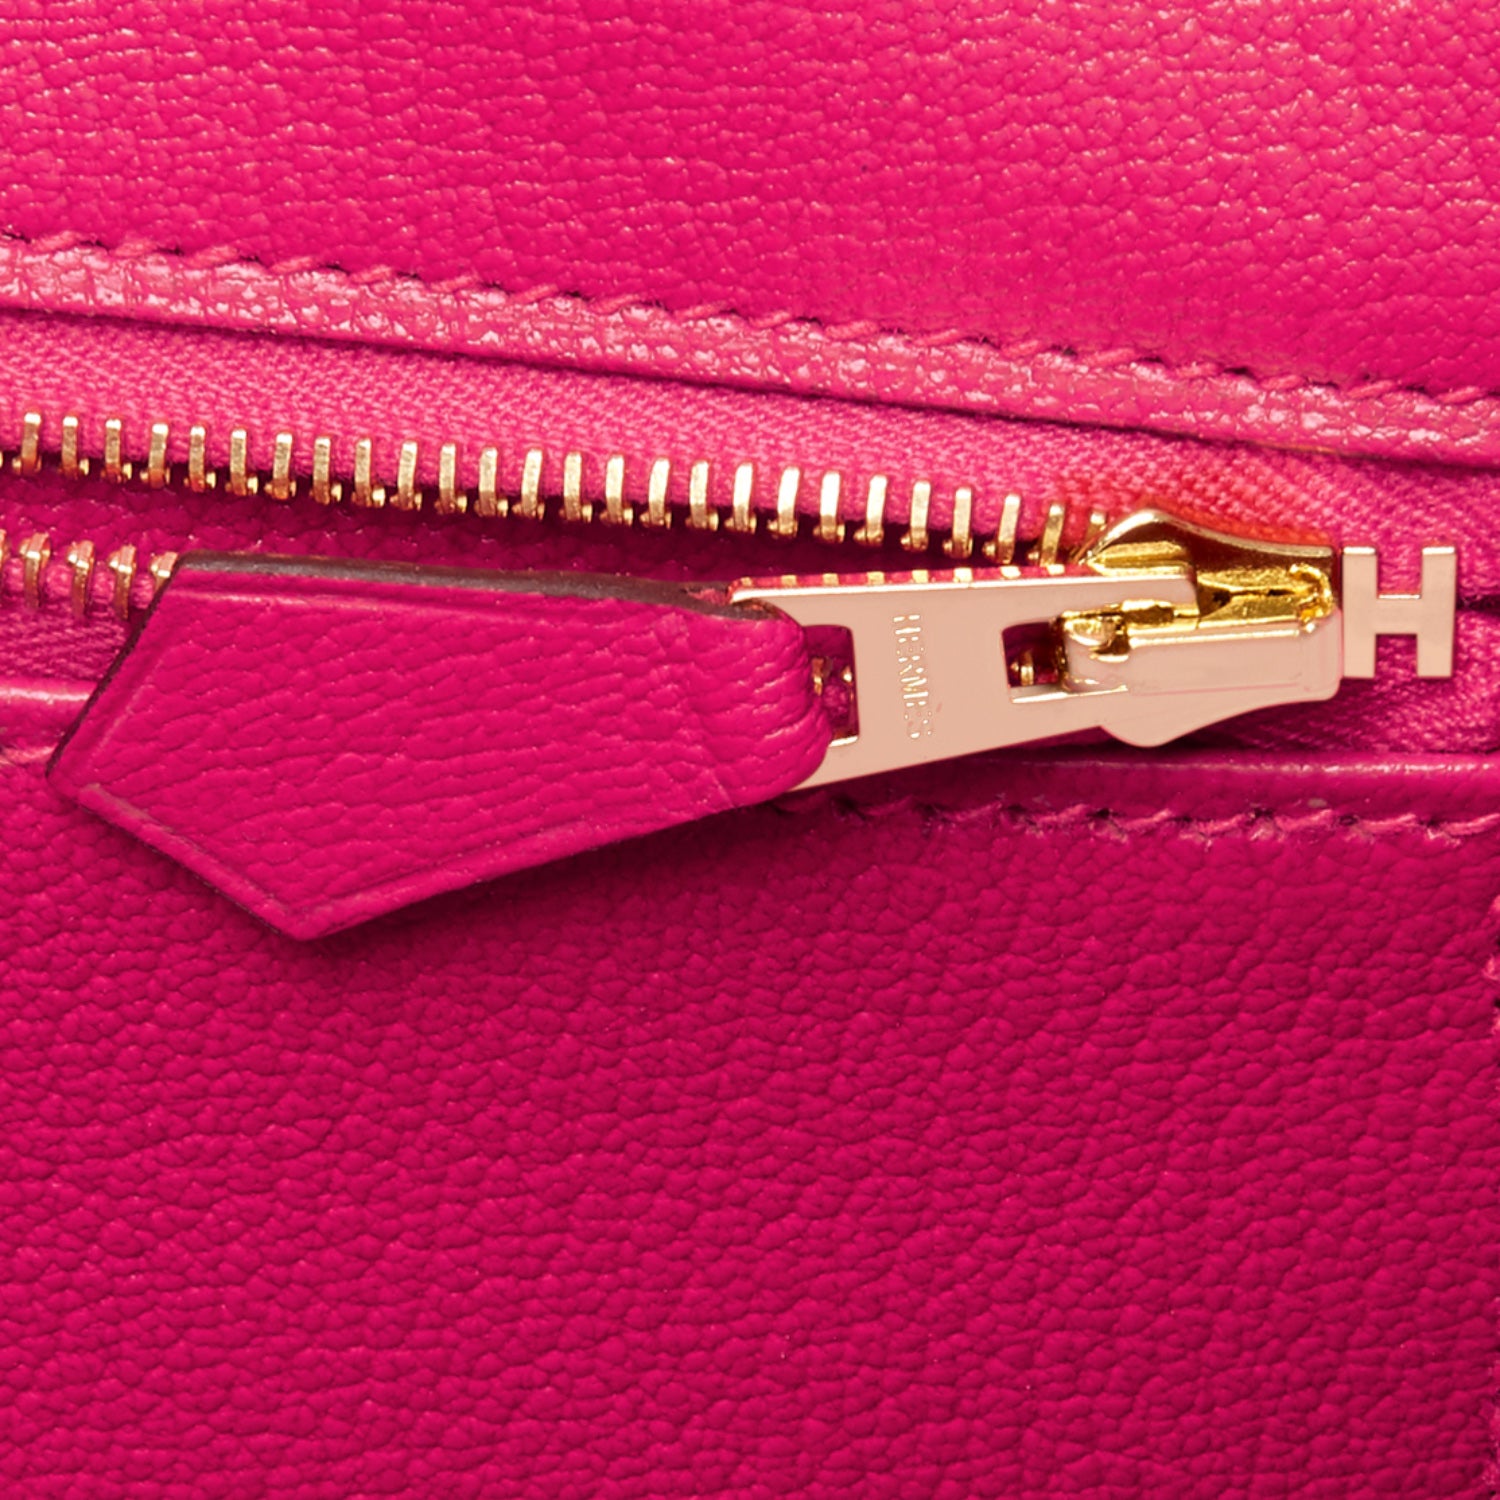 Hermès Birkin Tri-Color Sellier 30 Rouge Casaque Rose Extreme at